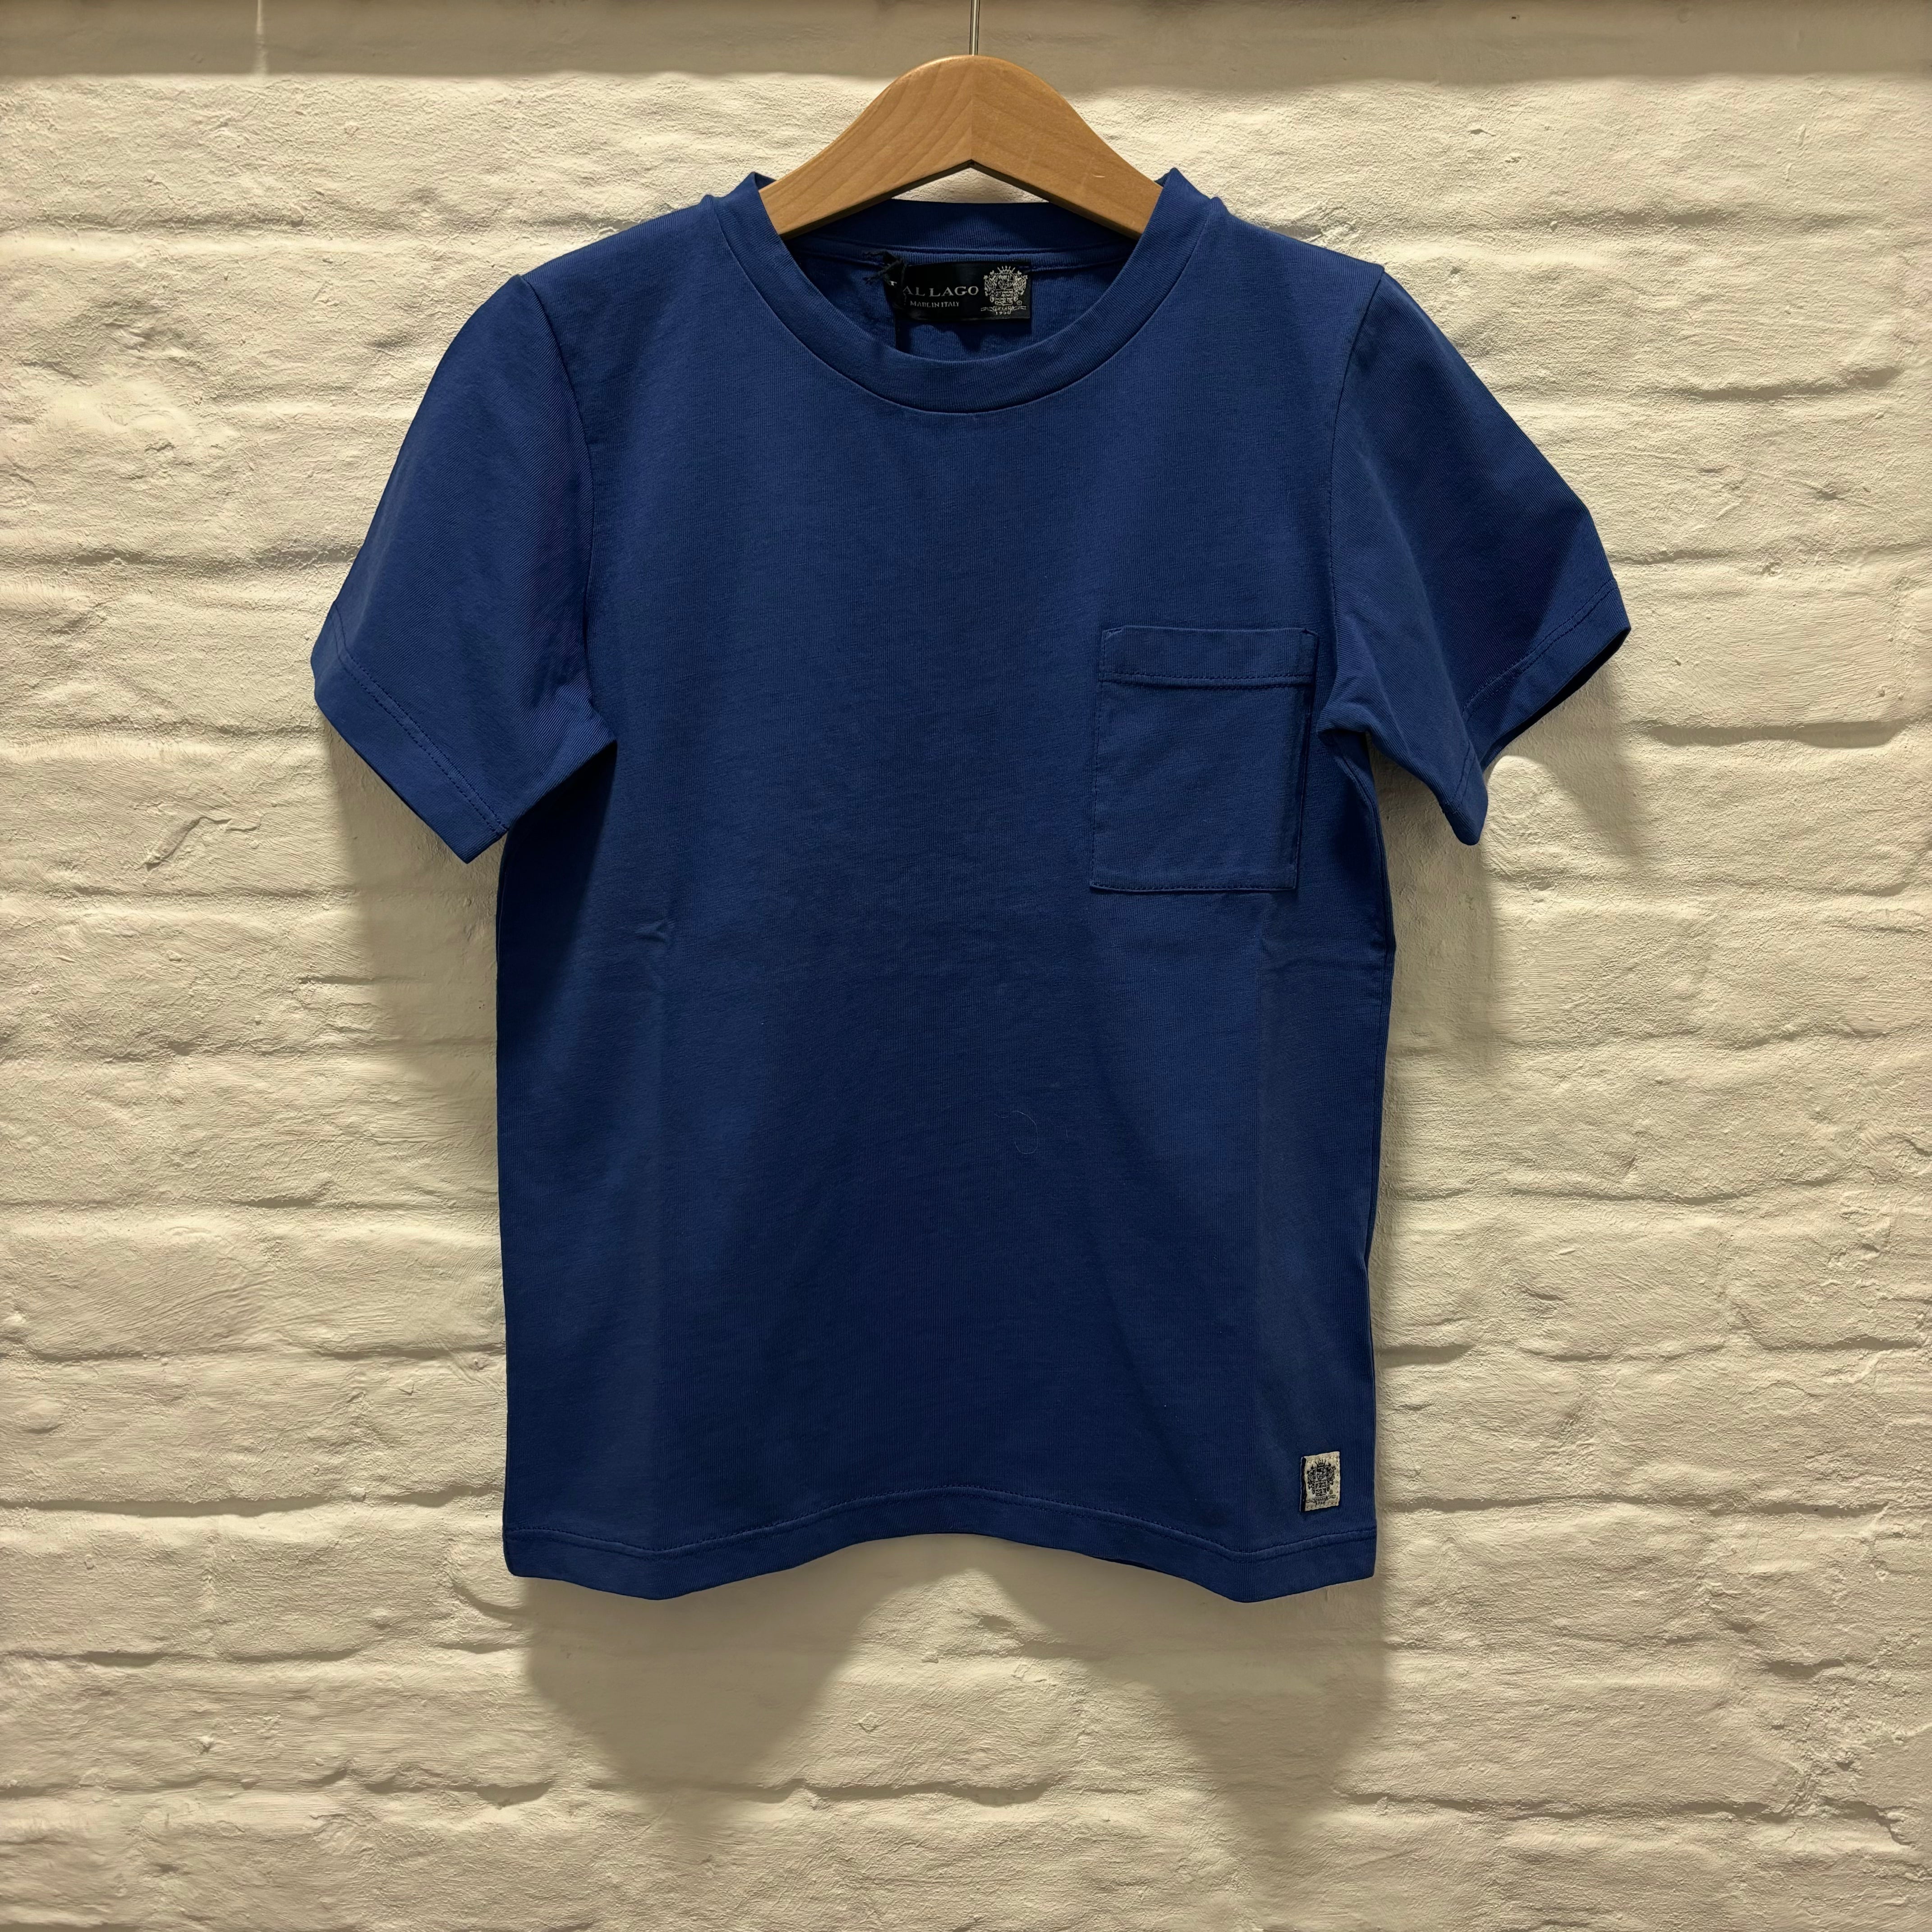 Dal Lago - jimmy t-shirt - blue